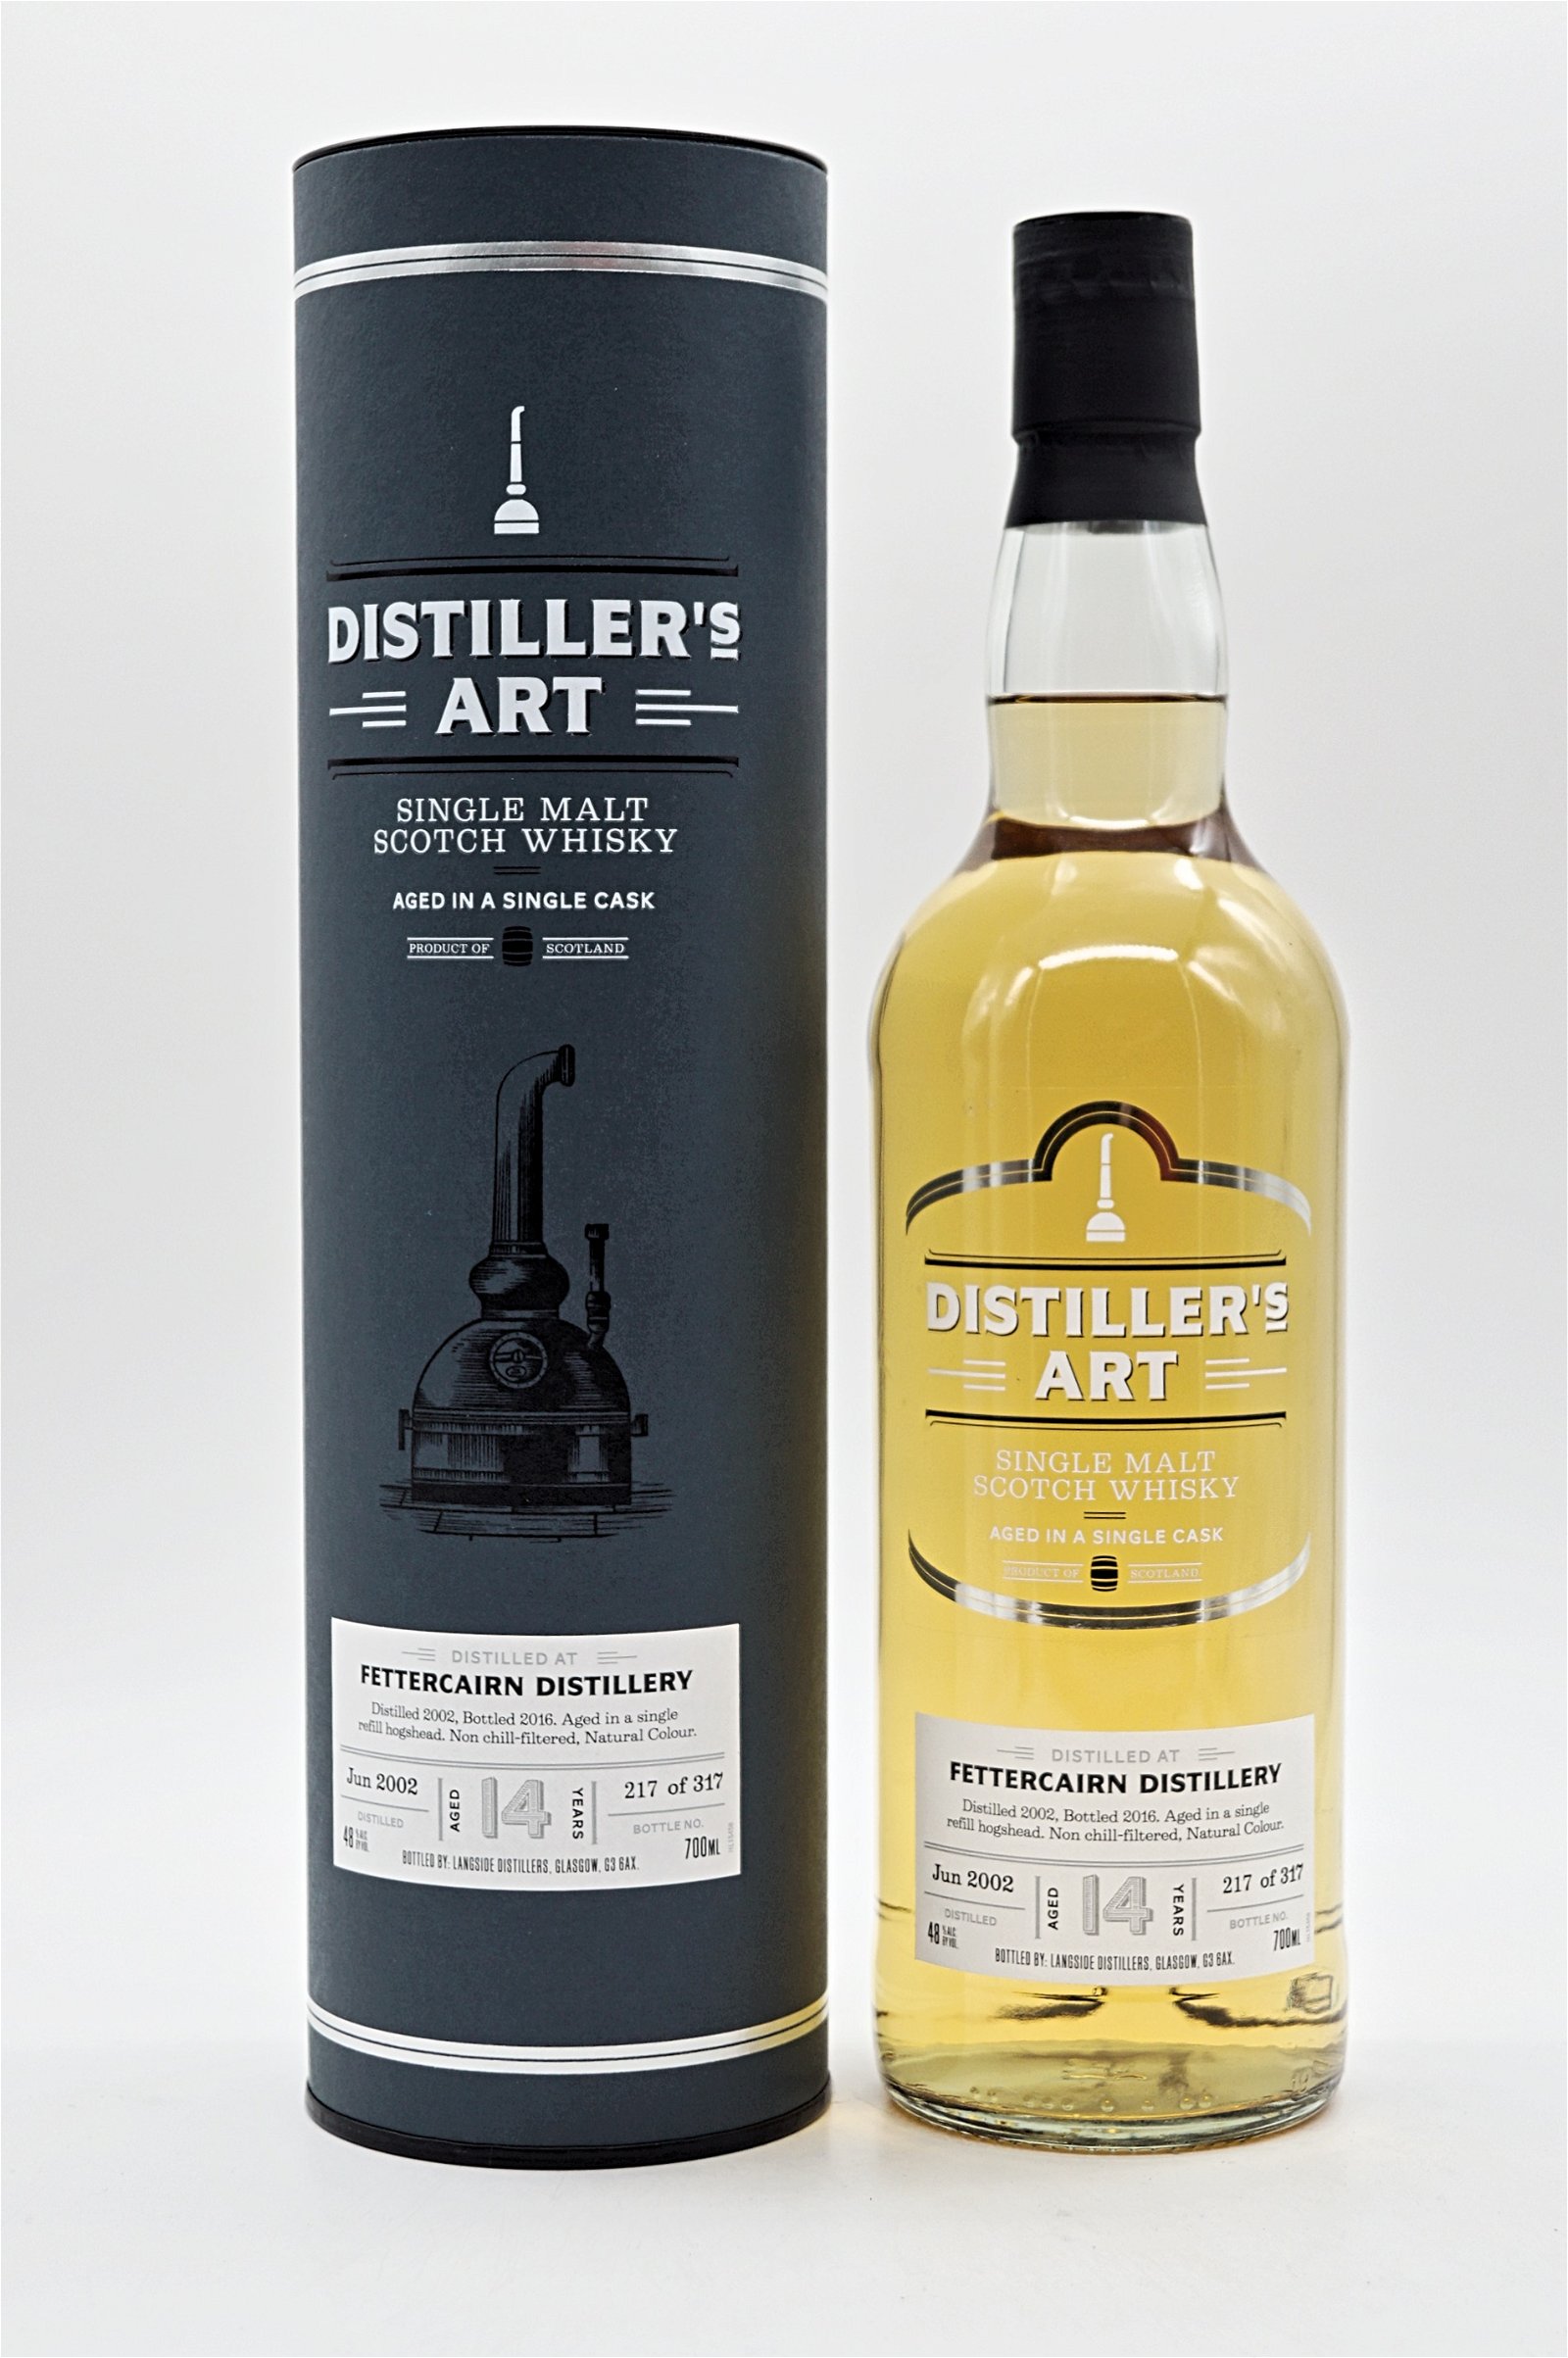 Distillers Art Fettercairn Distillery 14 Jahre 48% 317 Fl. Single Cask Single Malt Scotch Whisky